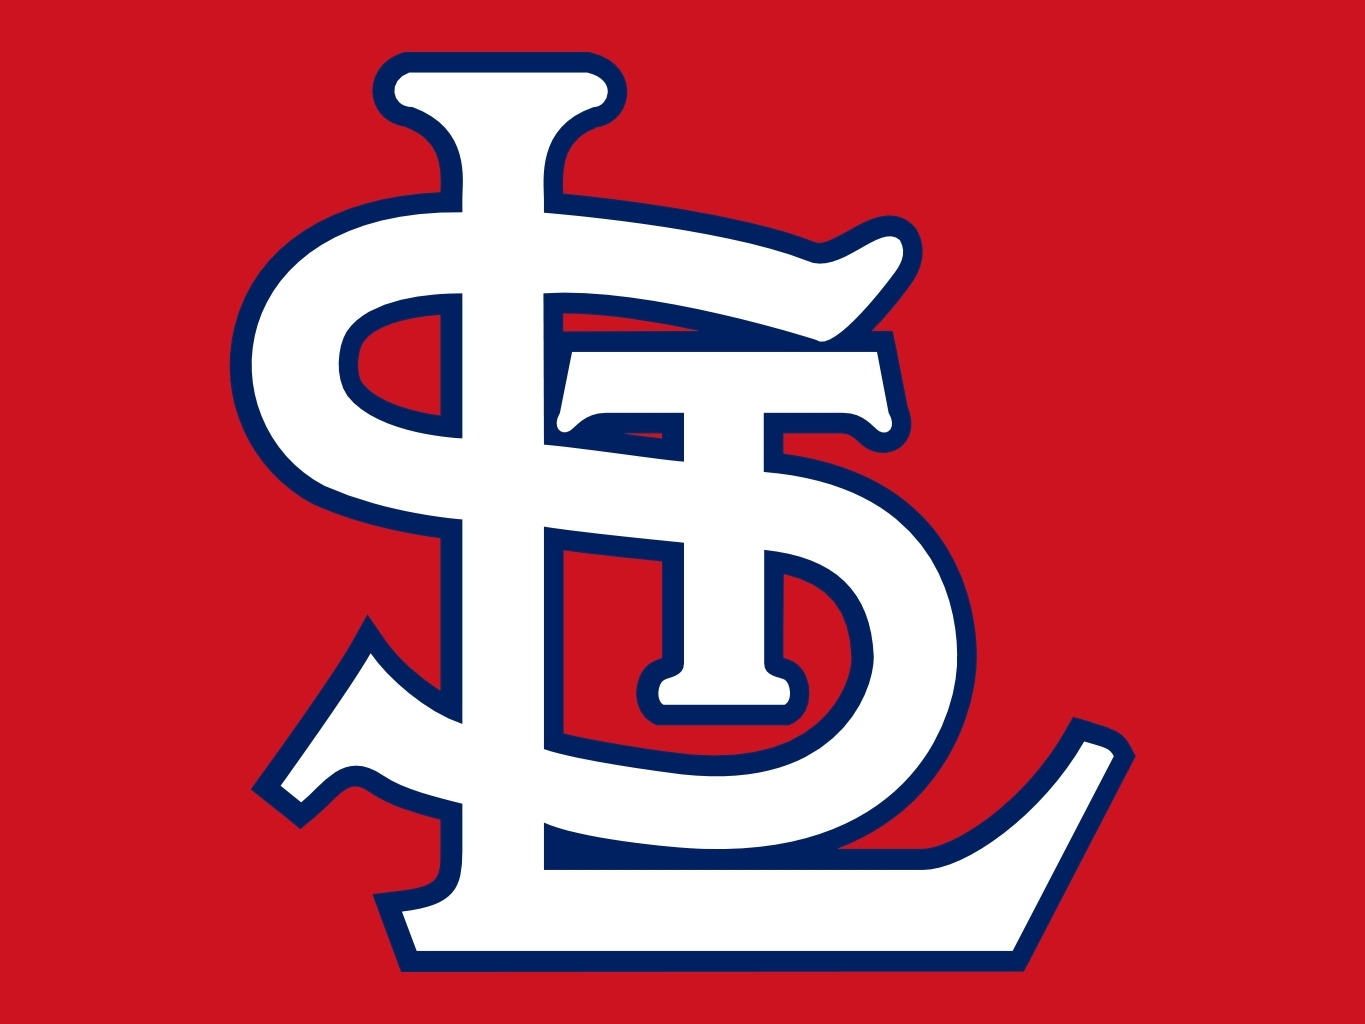 St. Louis Cardinals Logo PNG Transparent & SVG Vector - Freebie Supply